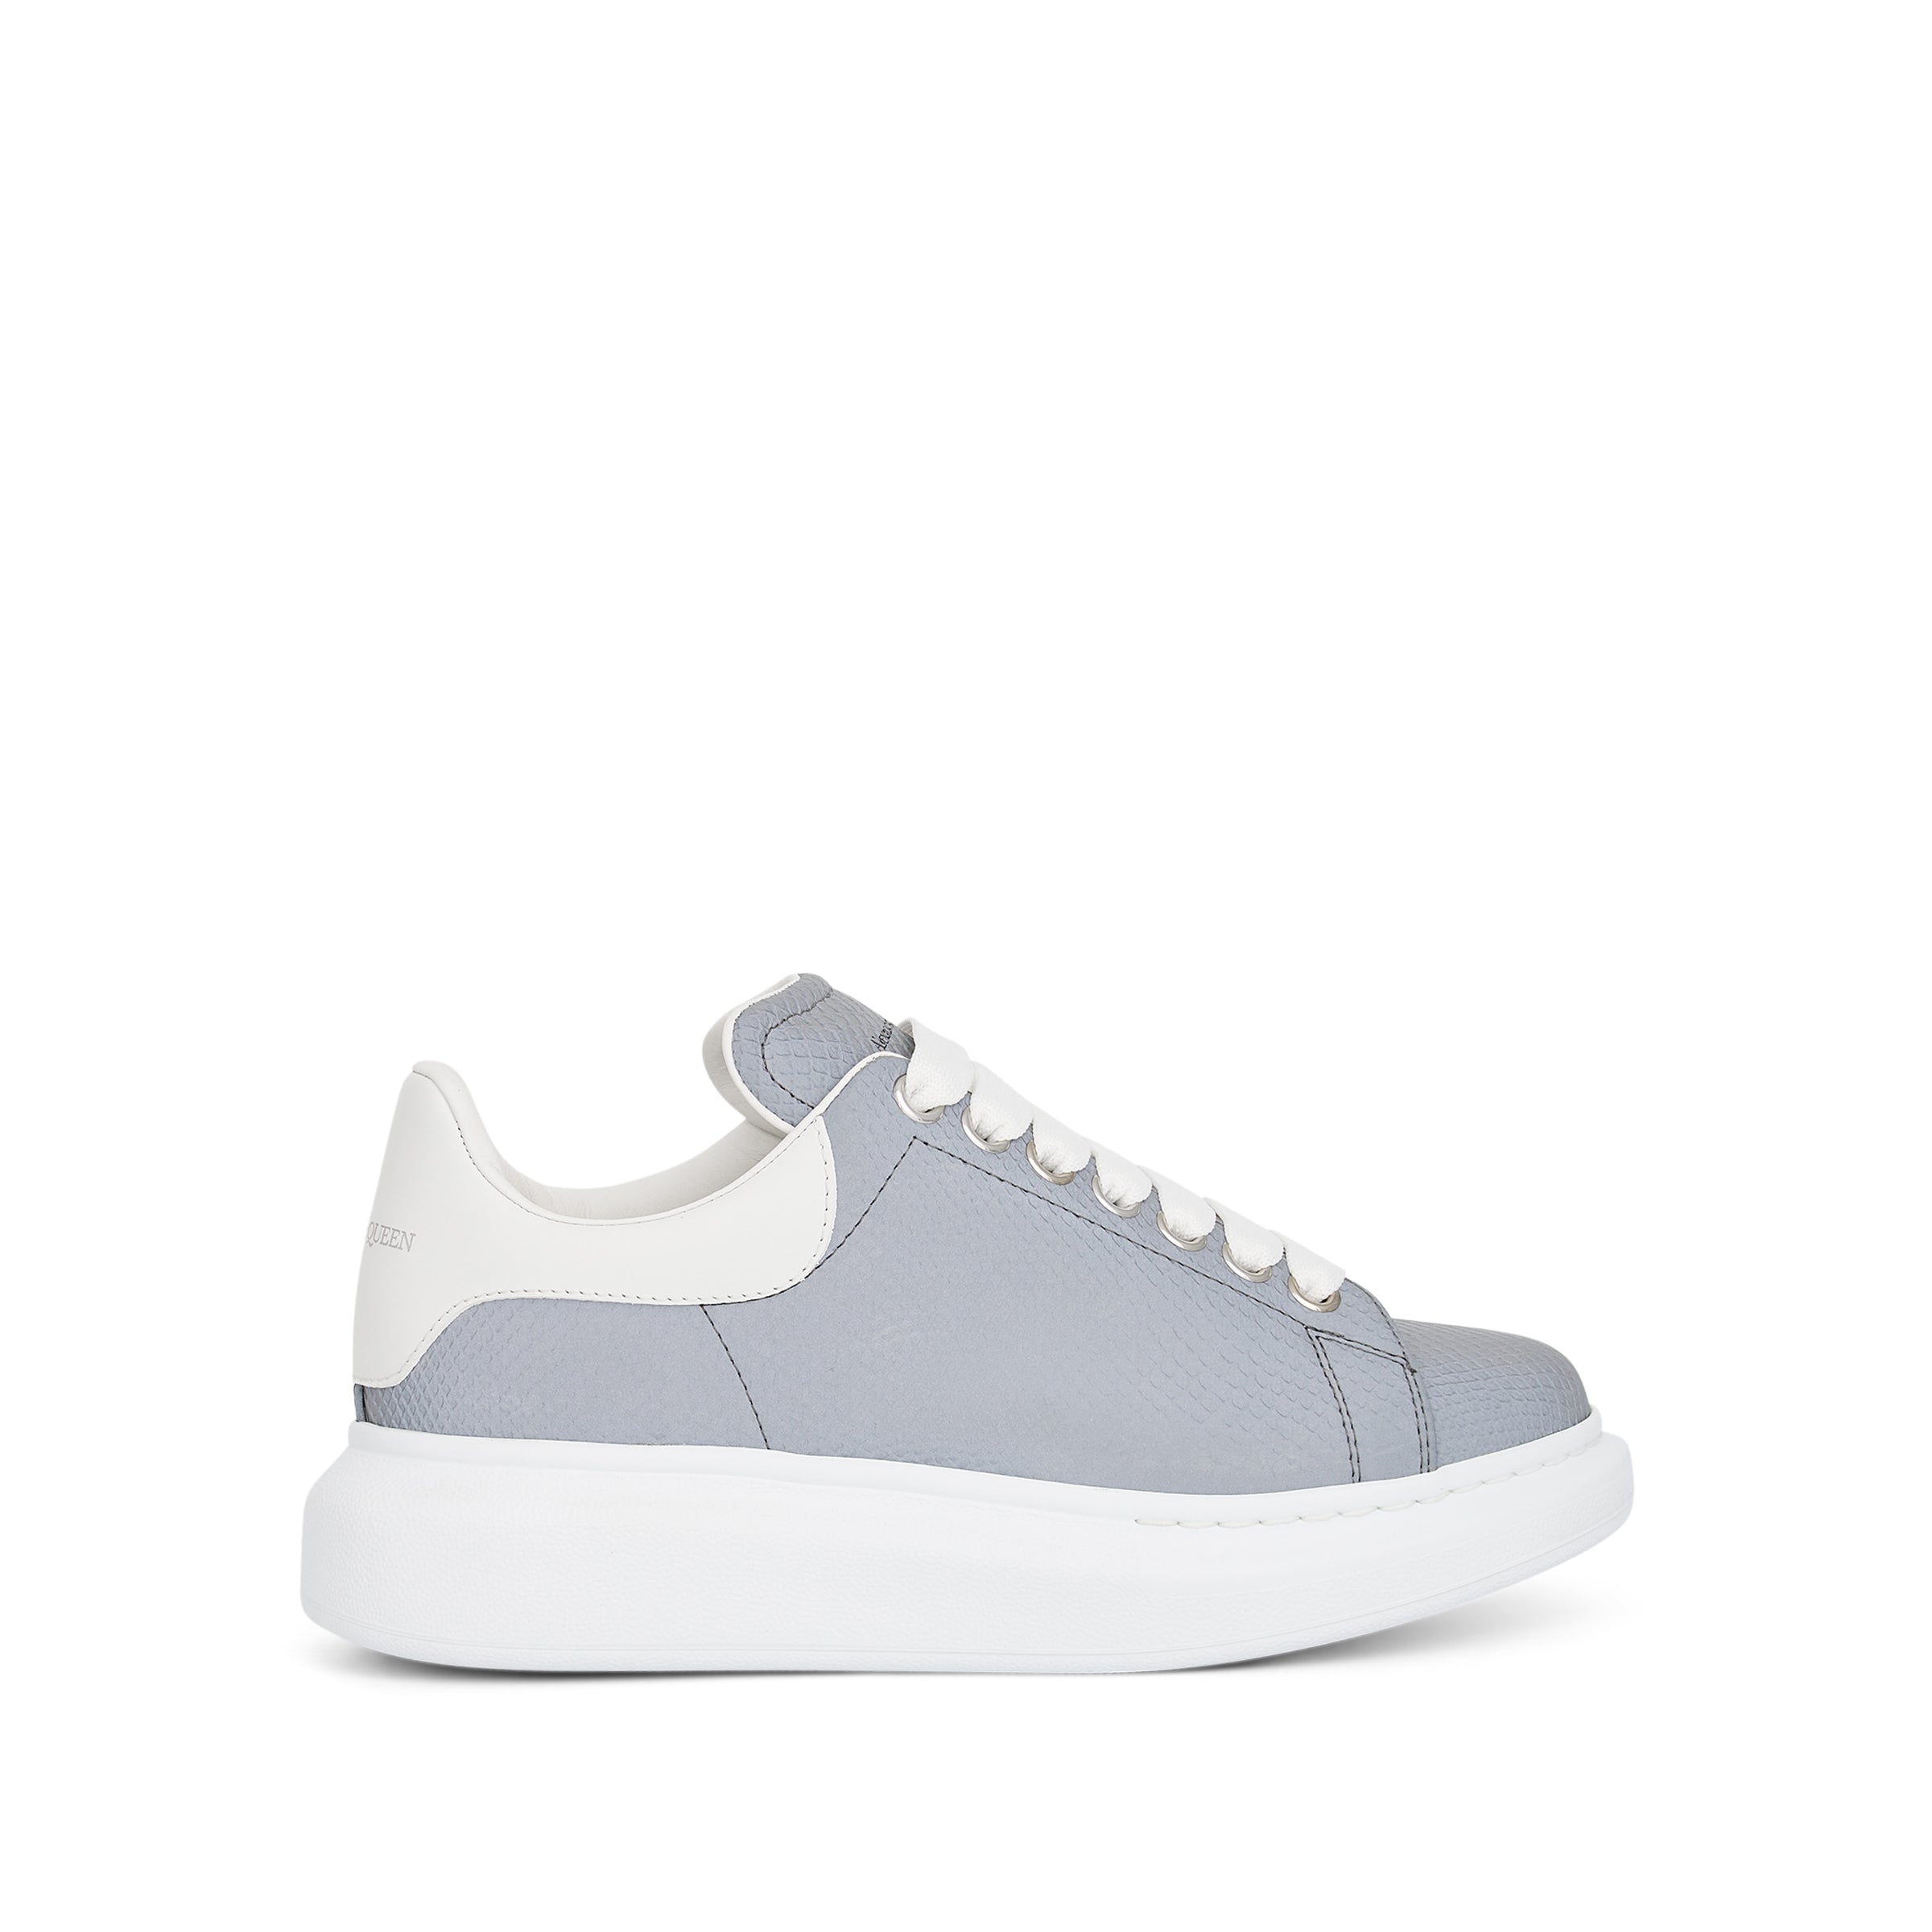 Larry Reflective Sneaker in Grey/White - 1